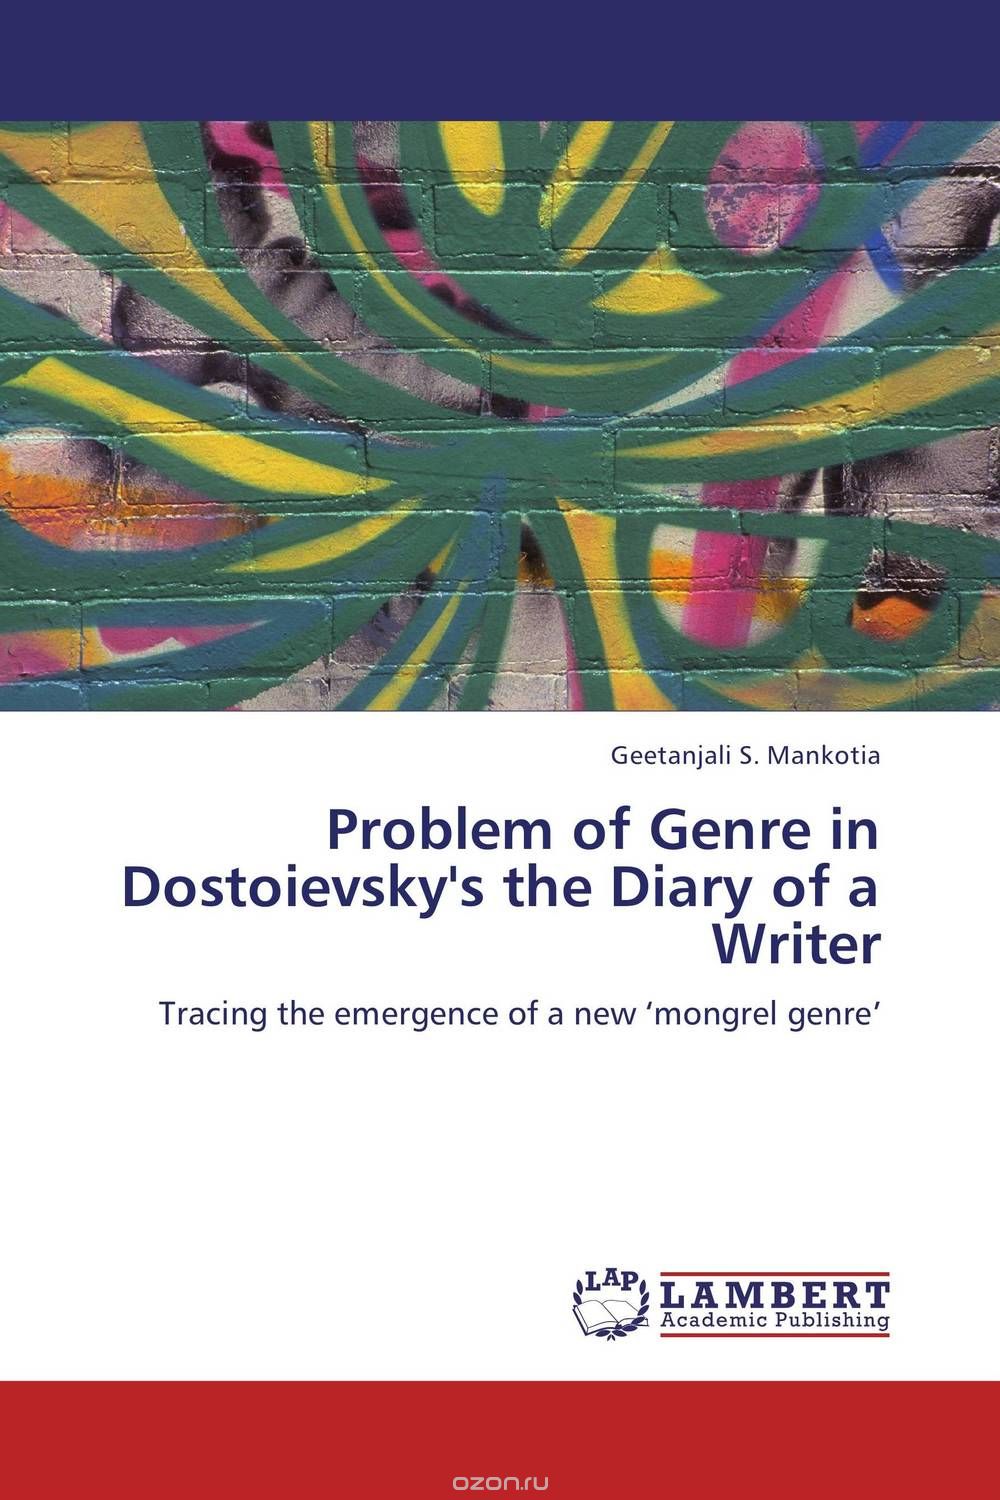 Скачать книгу "Problem of Genre in Dostoievsky's the Diary of a Writer"